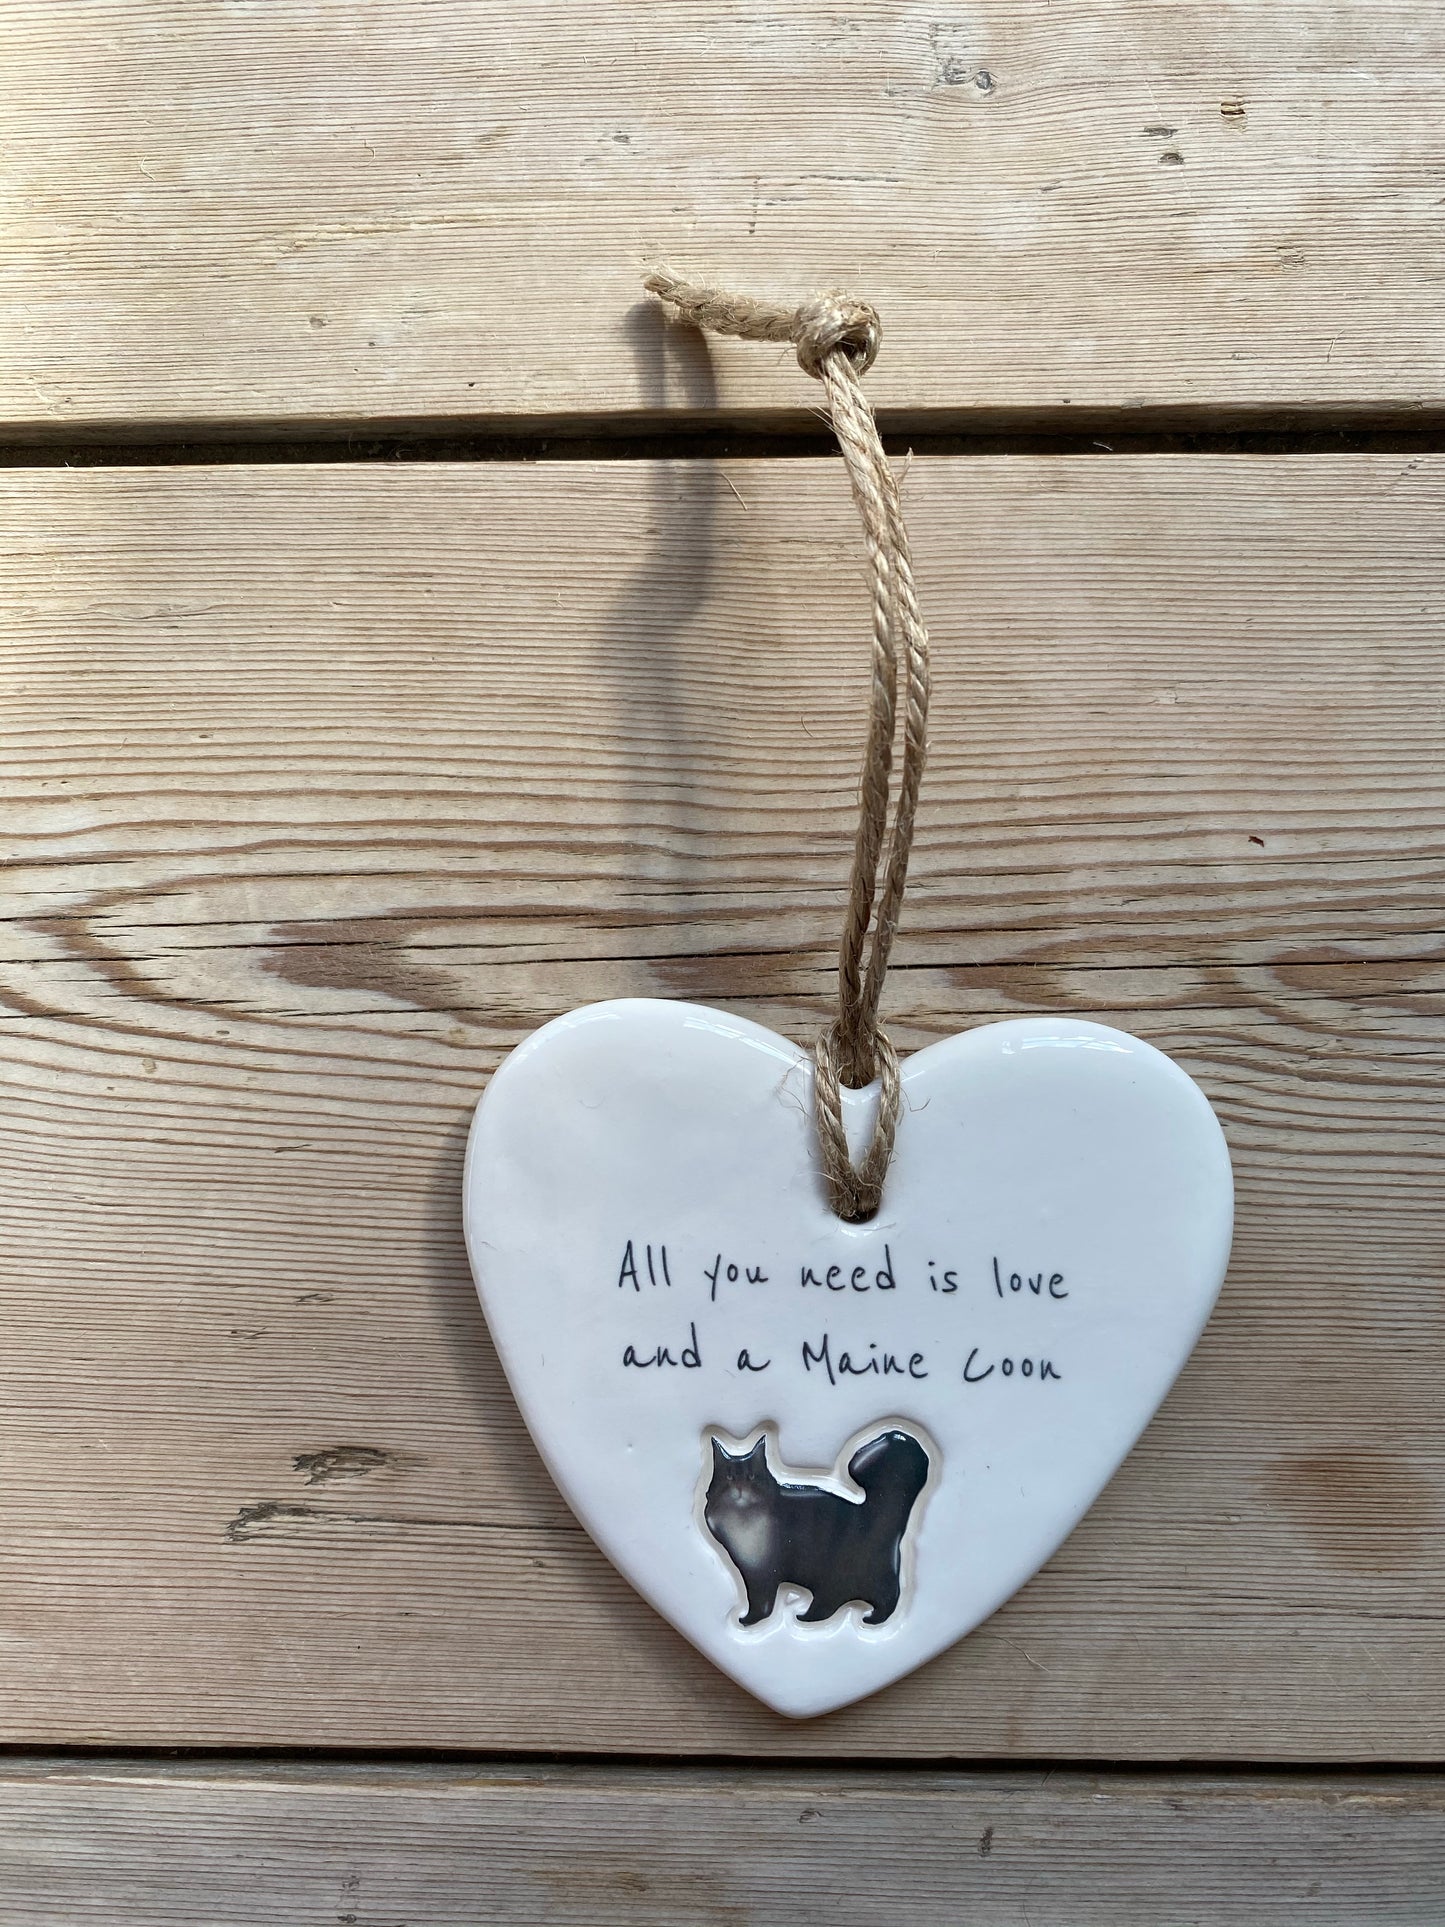 Maine Coon ceramic heart